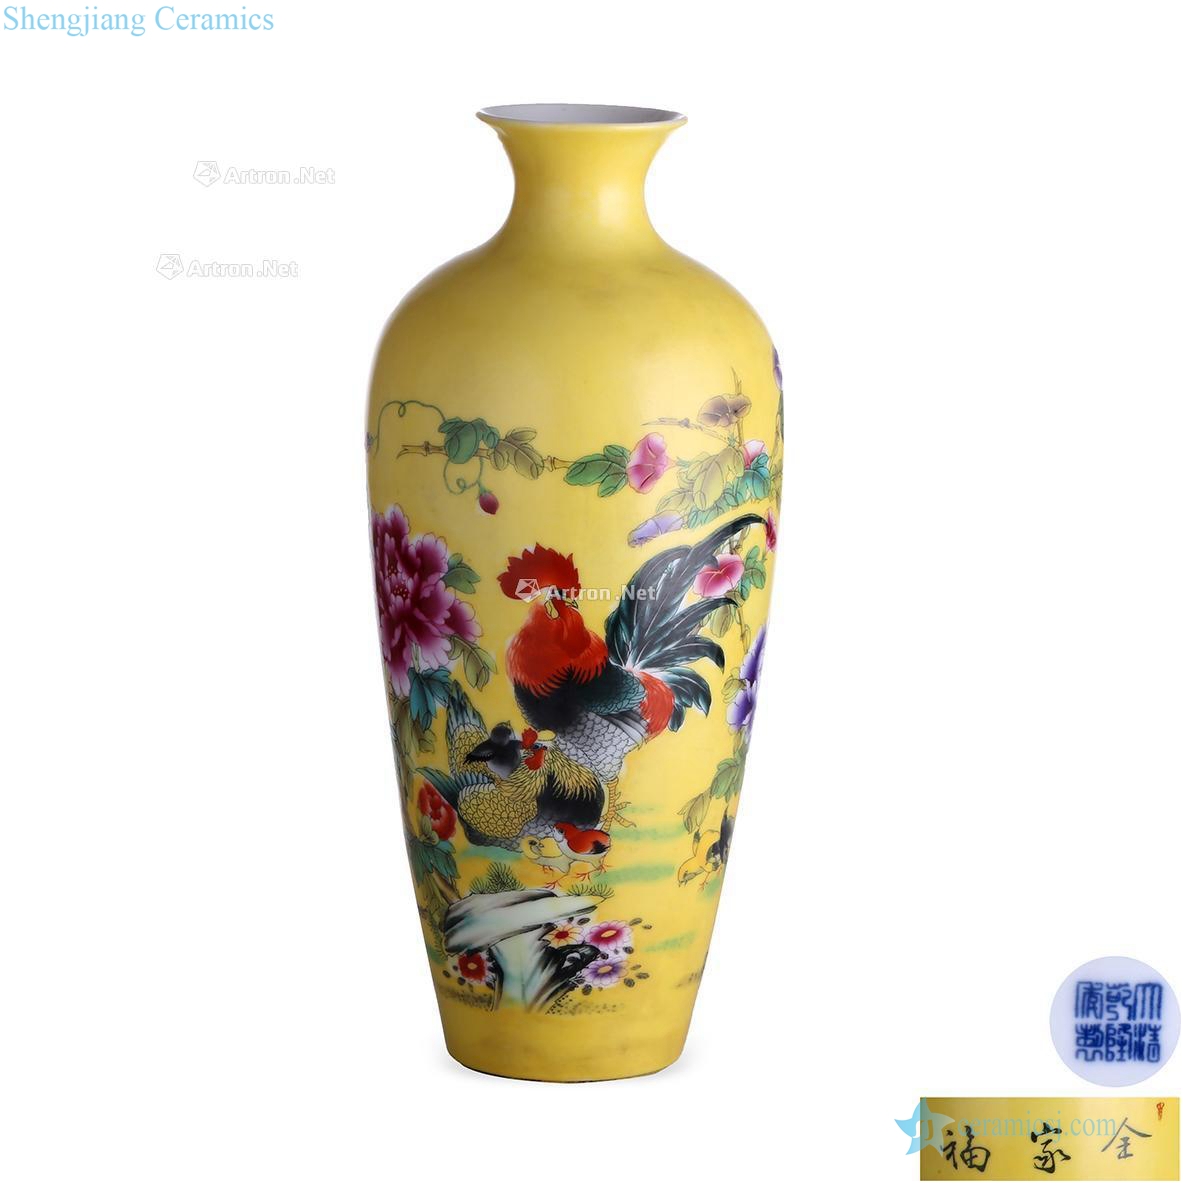 Pastel yellow glaze flower plum bottle in the qing dynasty